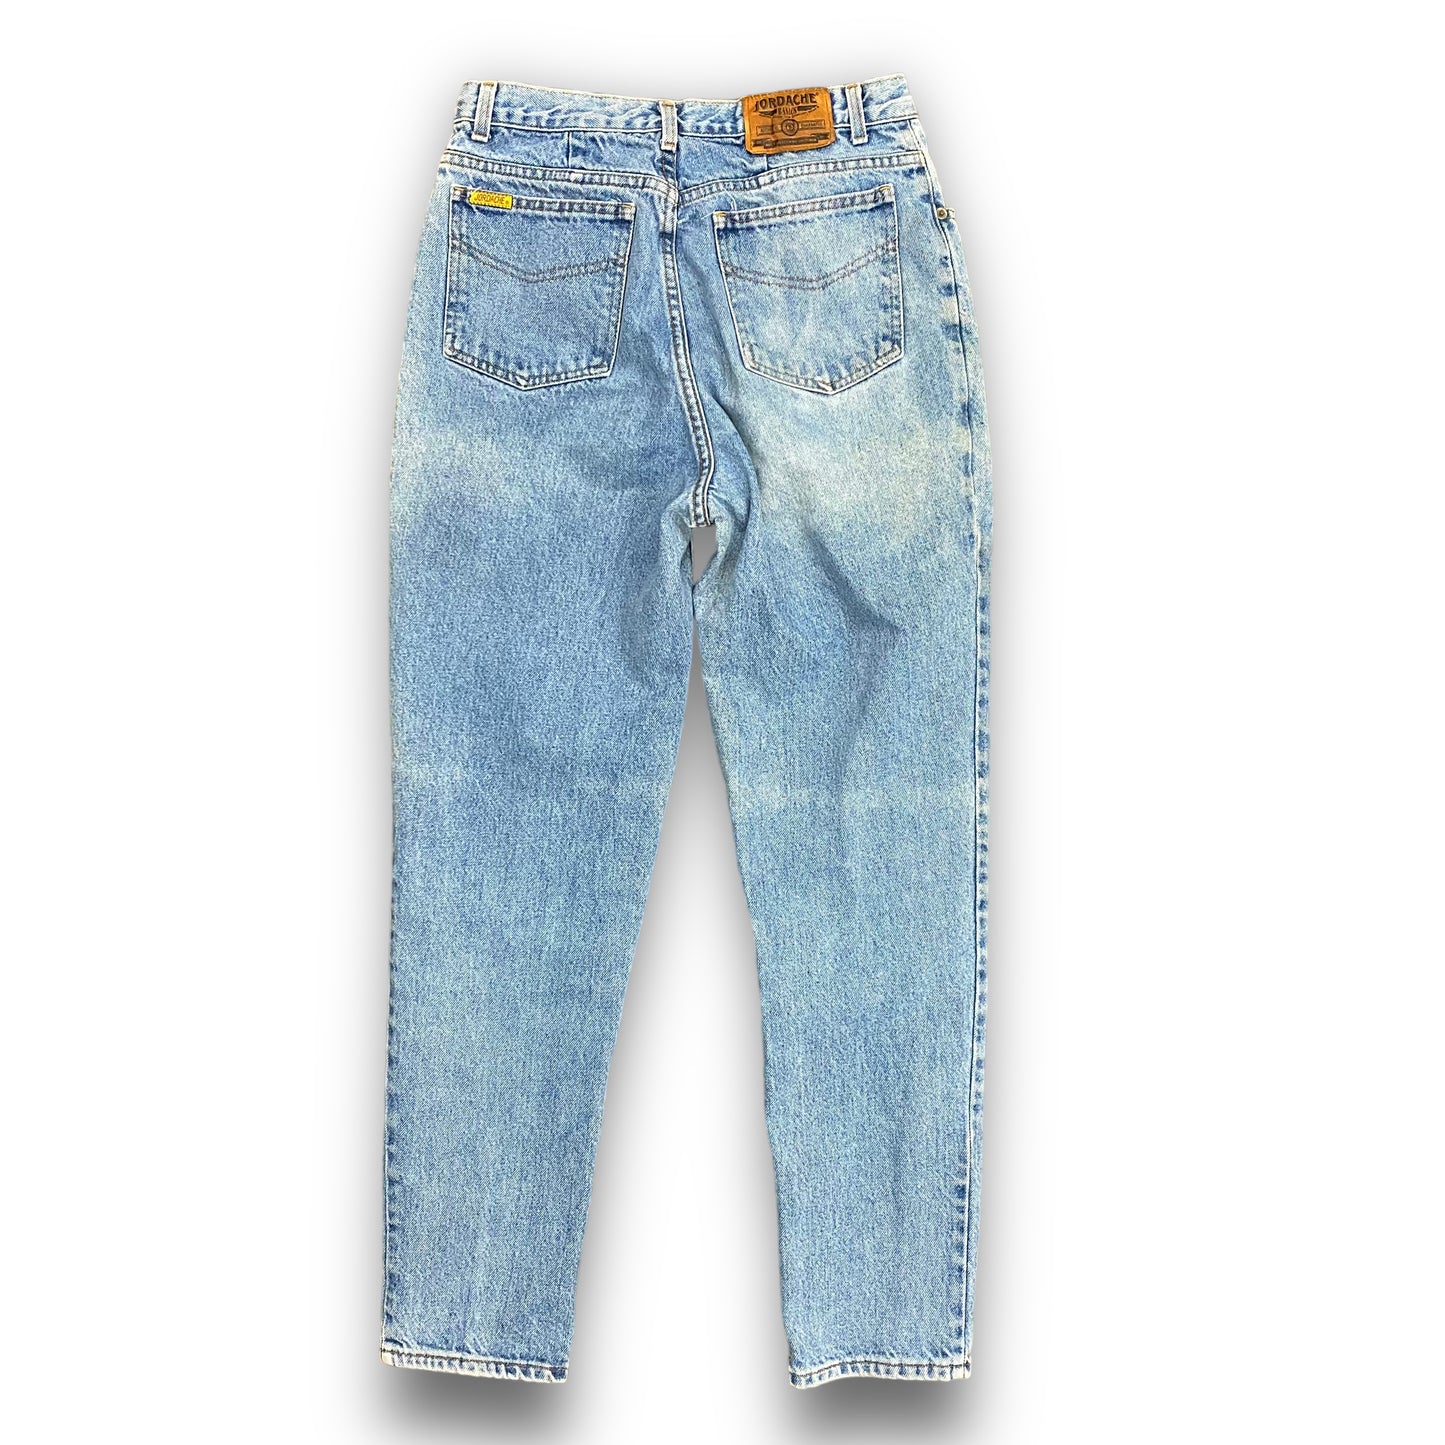 Vintage Jordache Medium Wash Jeans - 29"x29"